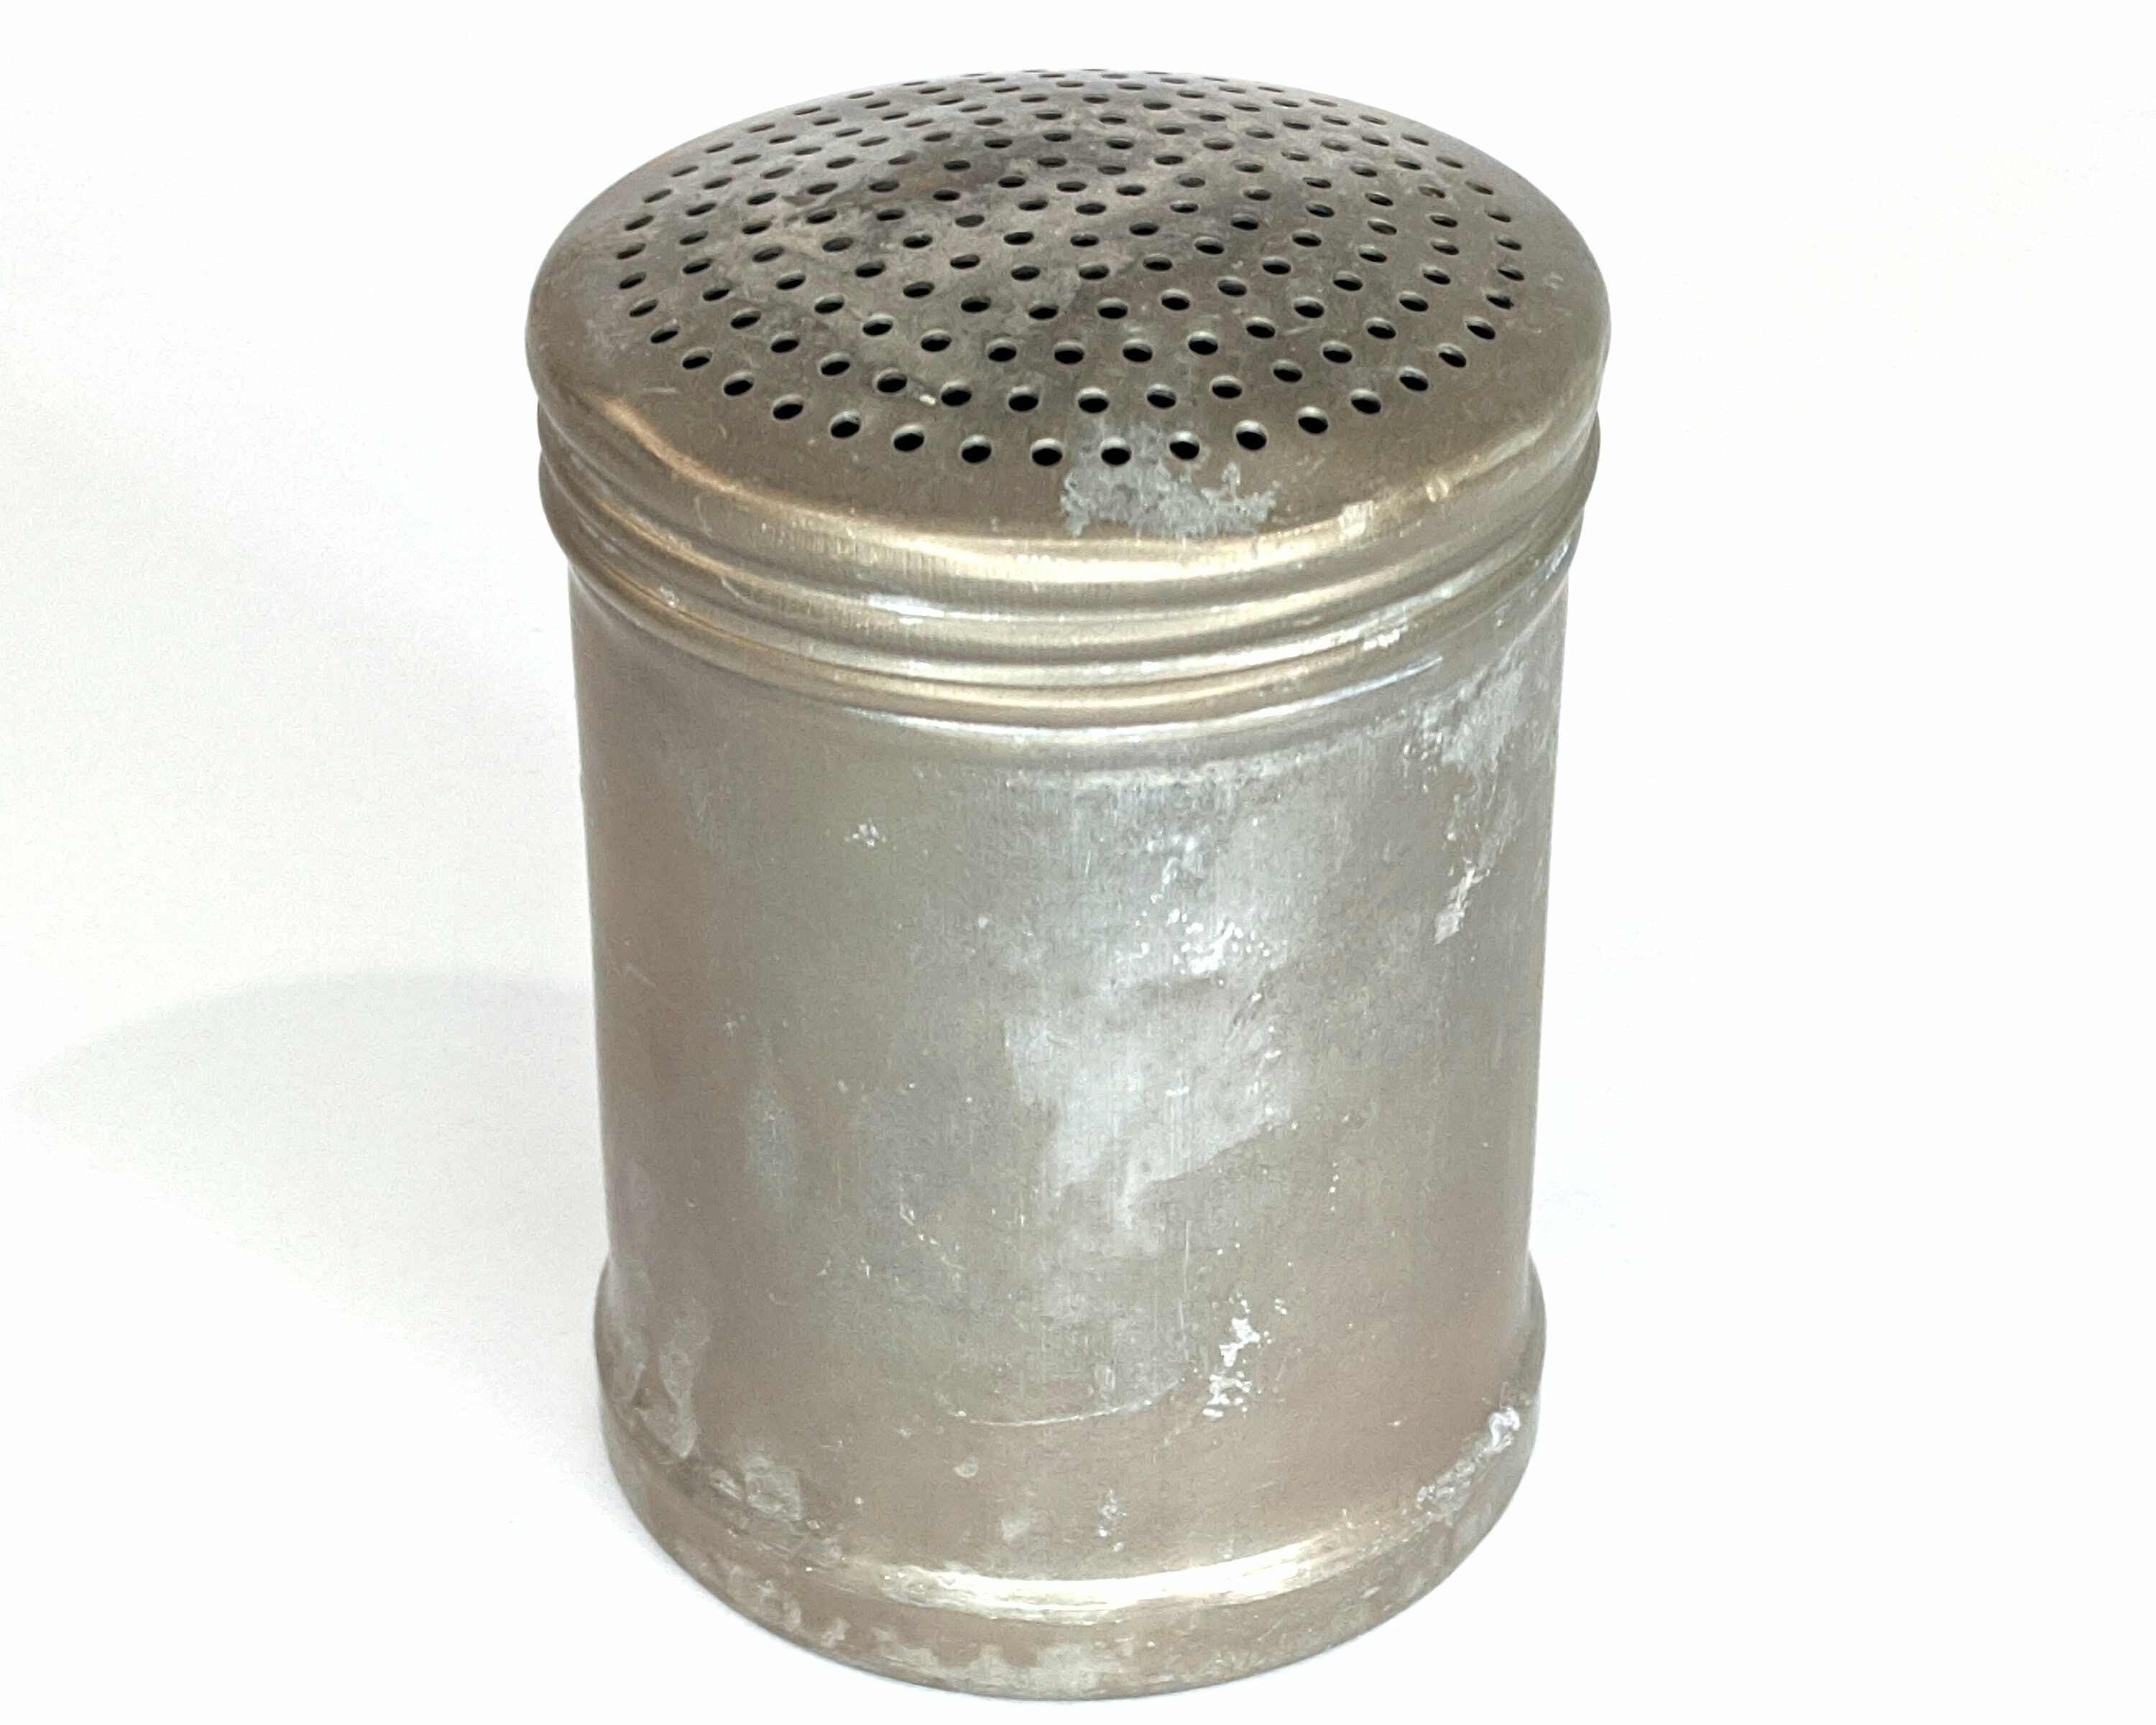 Vintage aluminum handled powdered sugar shaker - household items